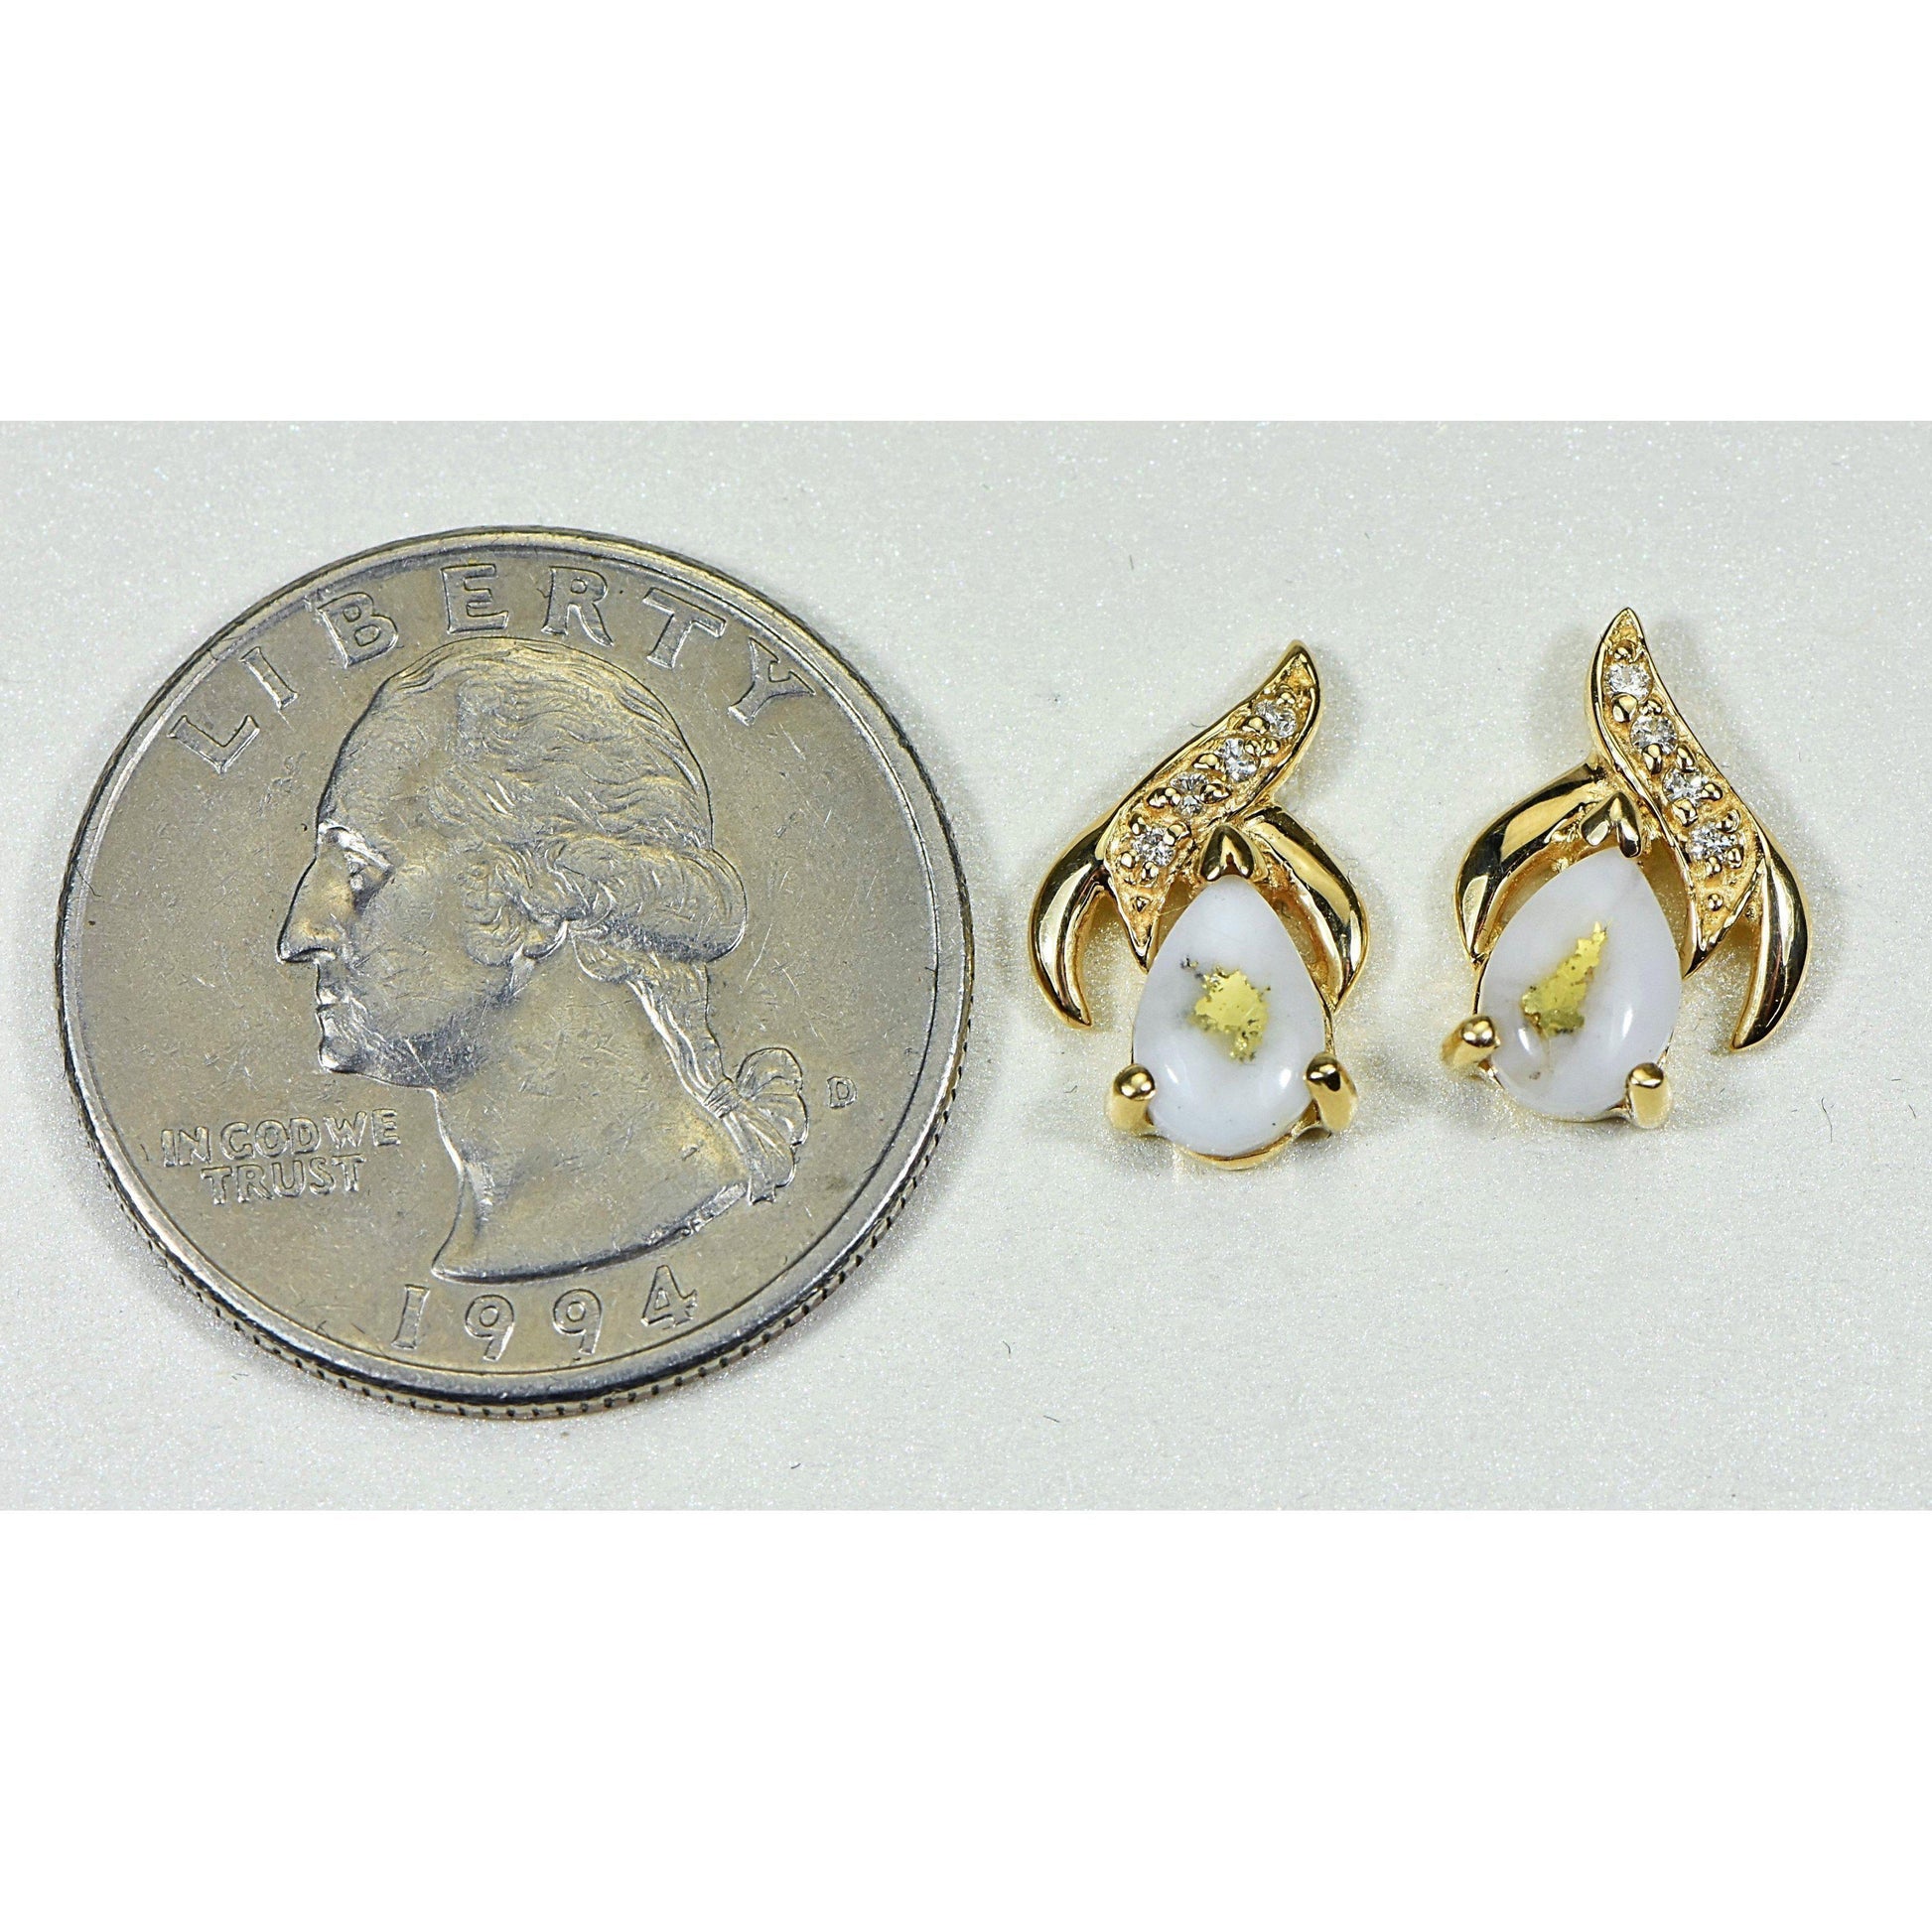 Orocal Gold Quartz Earrings Post Backs with Diamonds EN792SDQ-Destination Gold Detectors